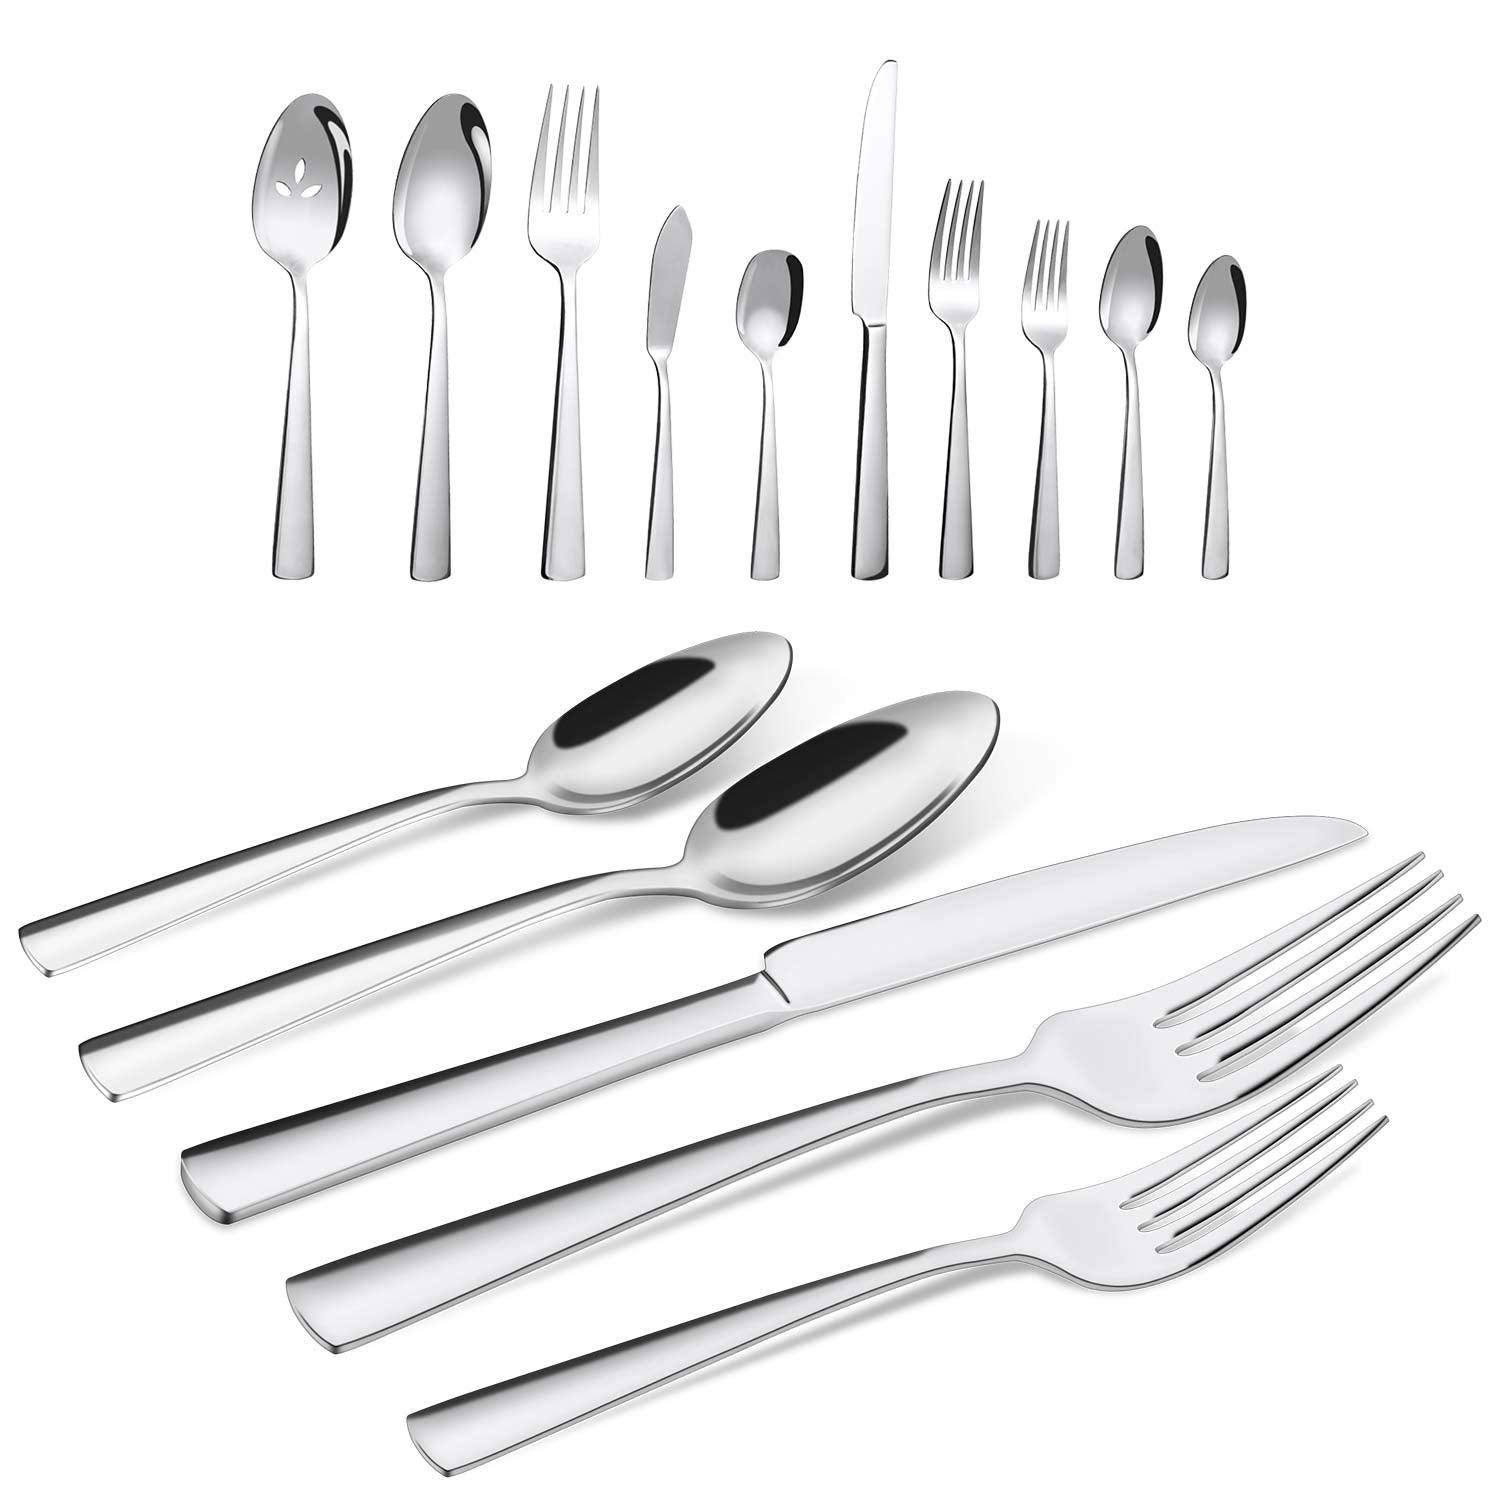 Silverware Flatware Stainless Steel Cutlery Set